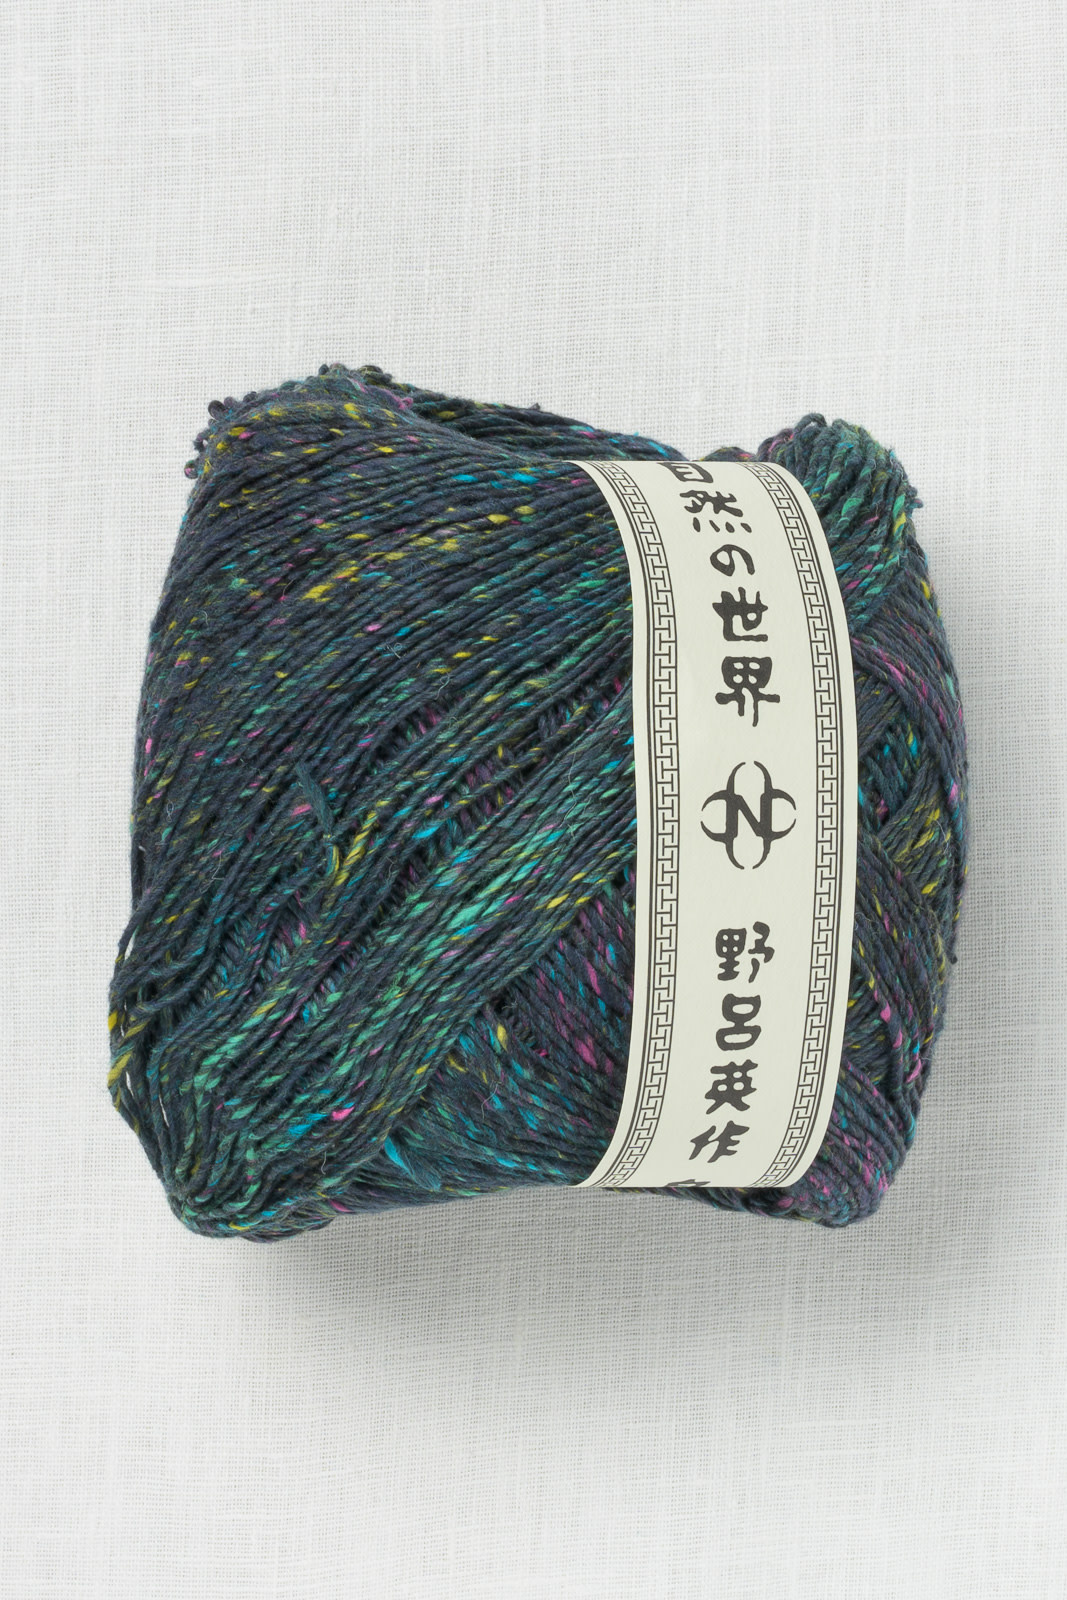 Noro Kakigori 07 Hakodate - Wool and Company Fine Yarn